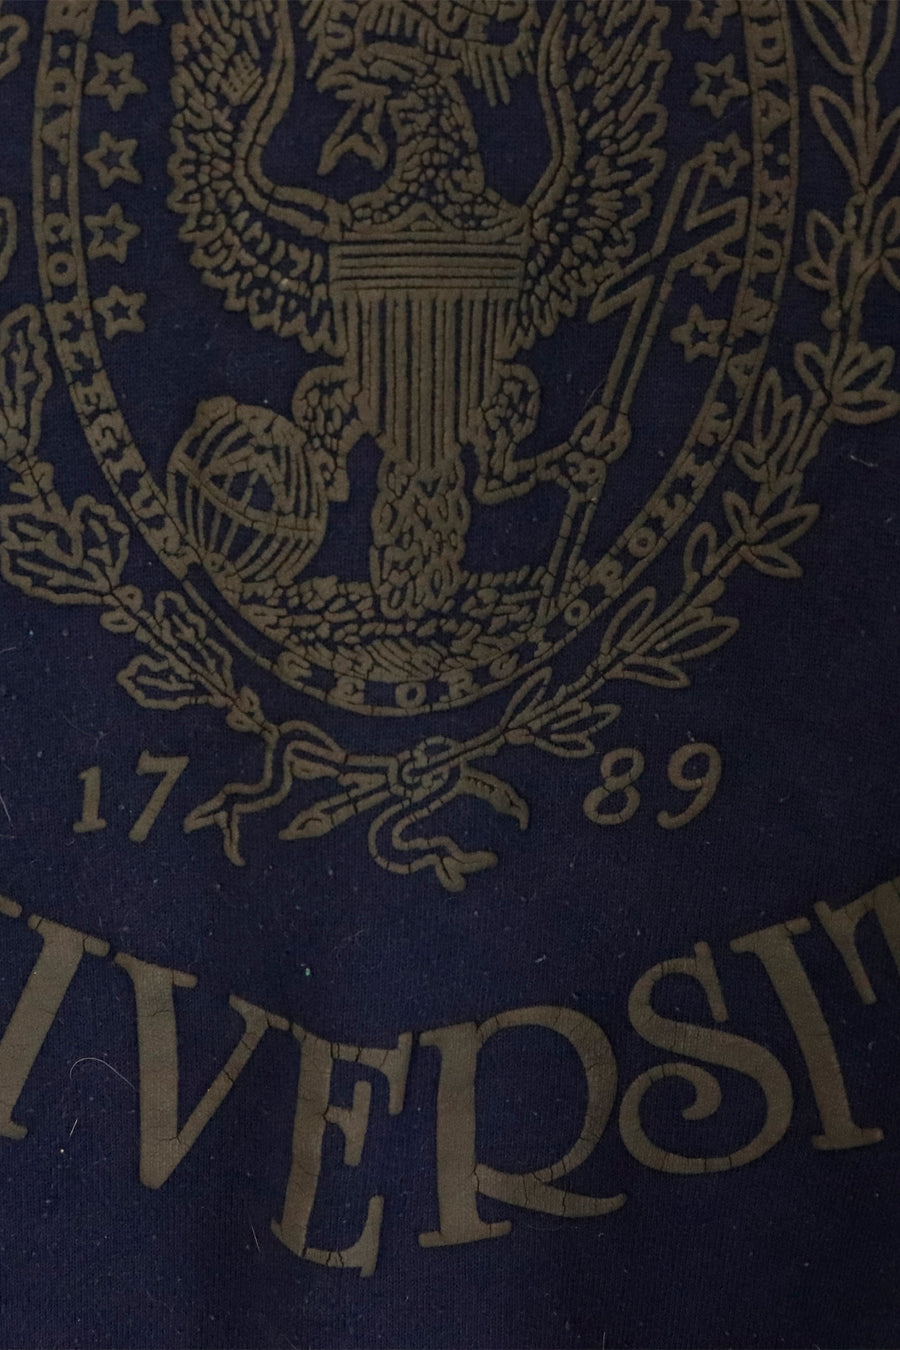 Vintage Georgetown University Crest Raised Letters Crewneck Sweatshirt Sz XL